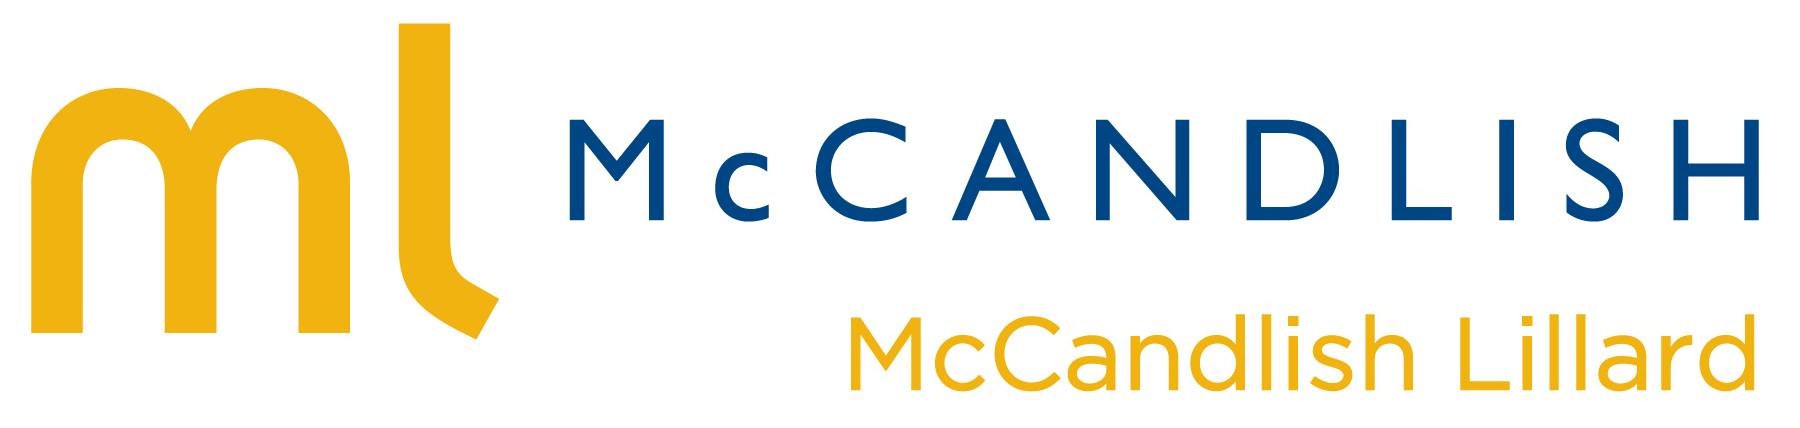 McCandlish Logo HiResJPG